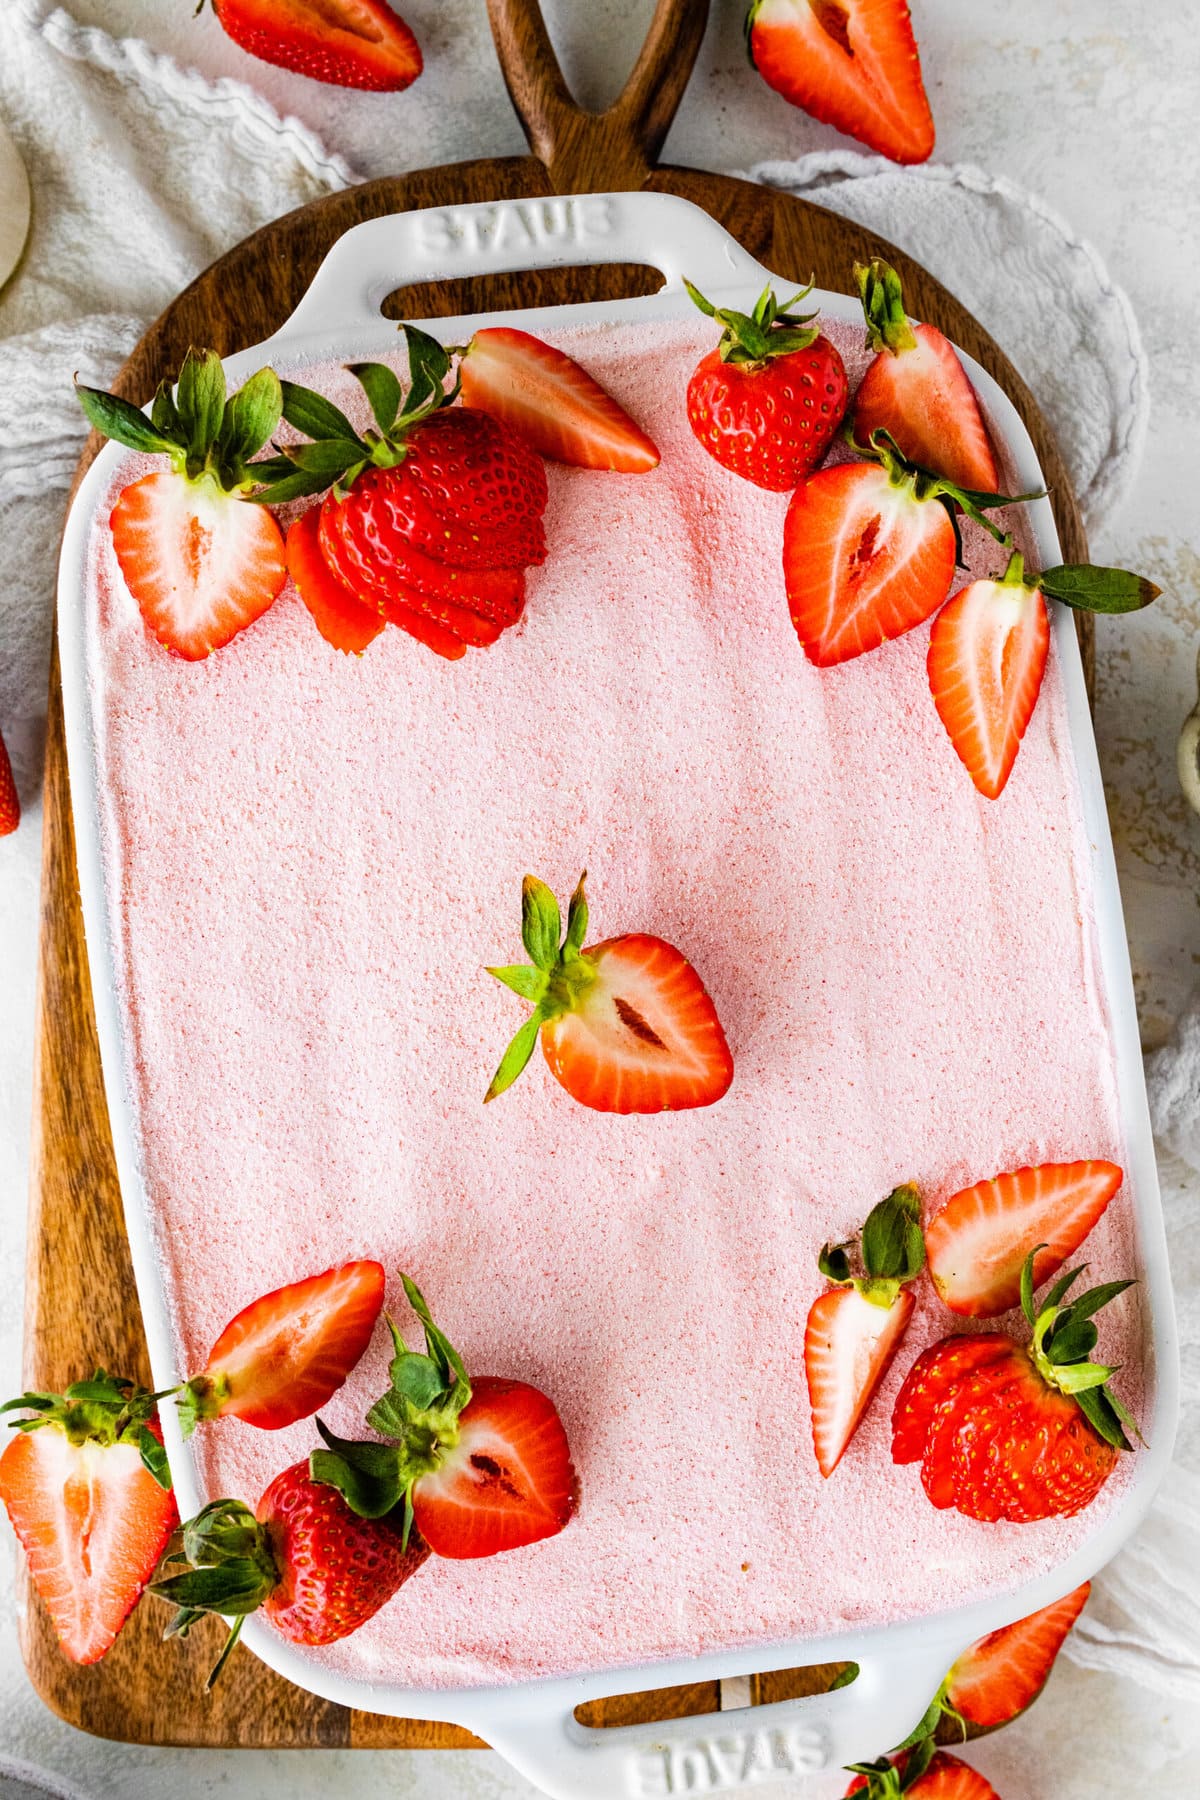 Best Strawberry Tiramisu Recipe (no egg). Final dish with strawberry powder for decoration and fresh cut strawberries on top.